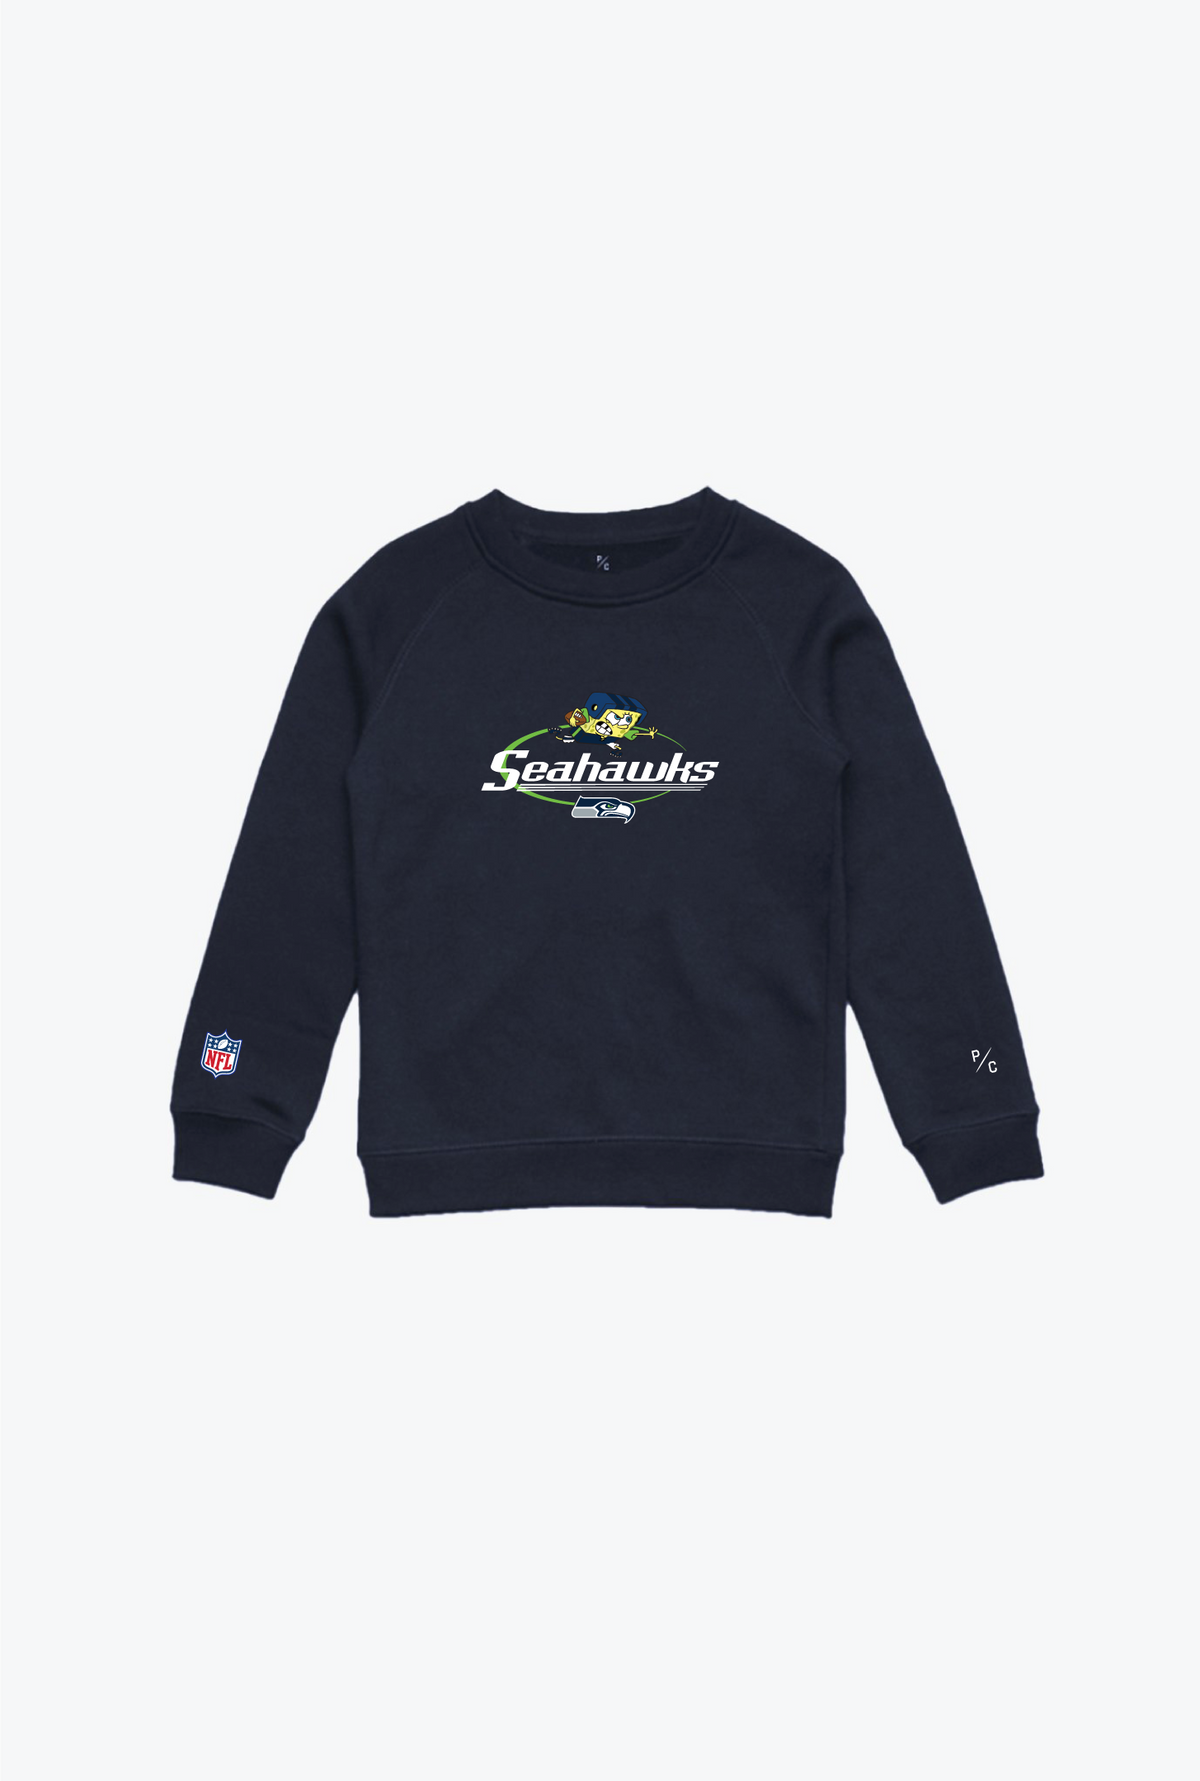 NFL x Nickelodeon Kids Embroidered Crewneck - Seattle Seahawks